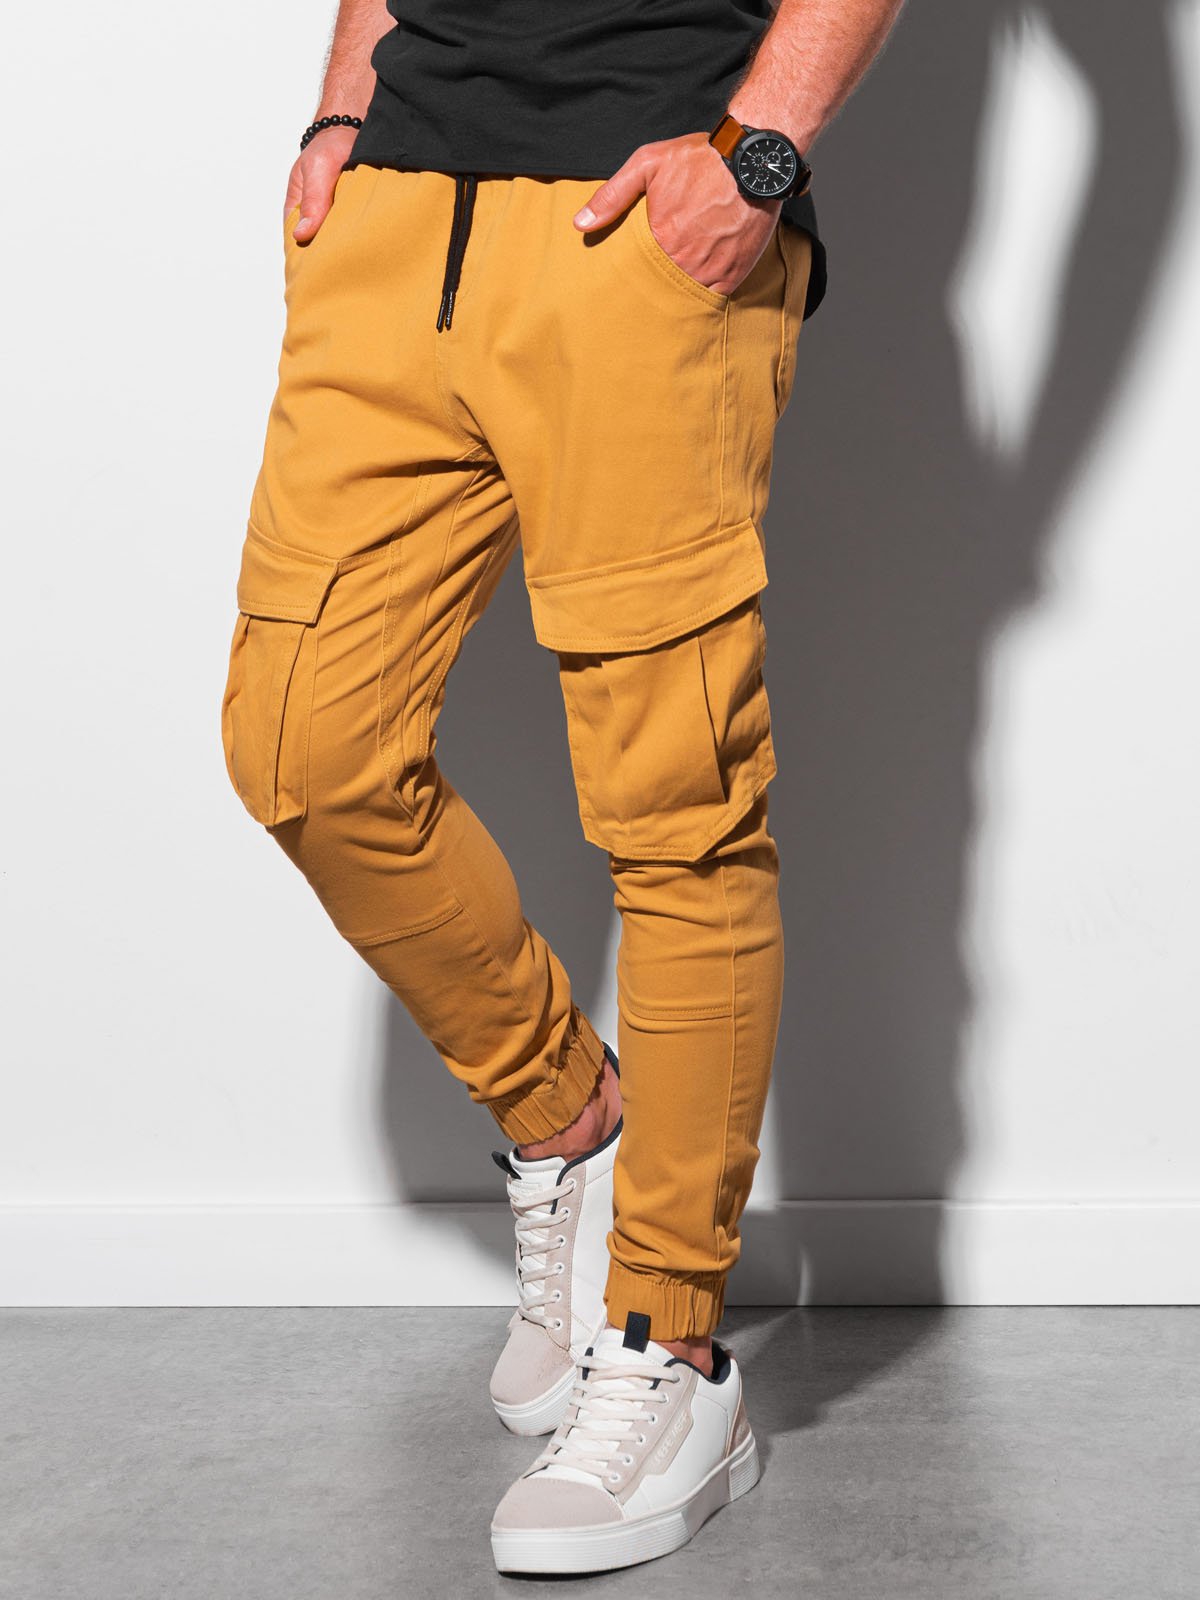 Men's pants joggers P886 - mustard | MODONE wholesale - Clothing For Men